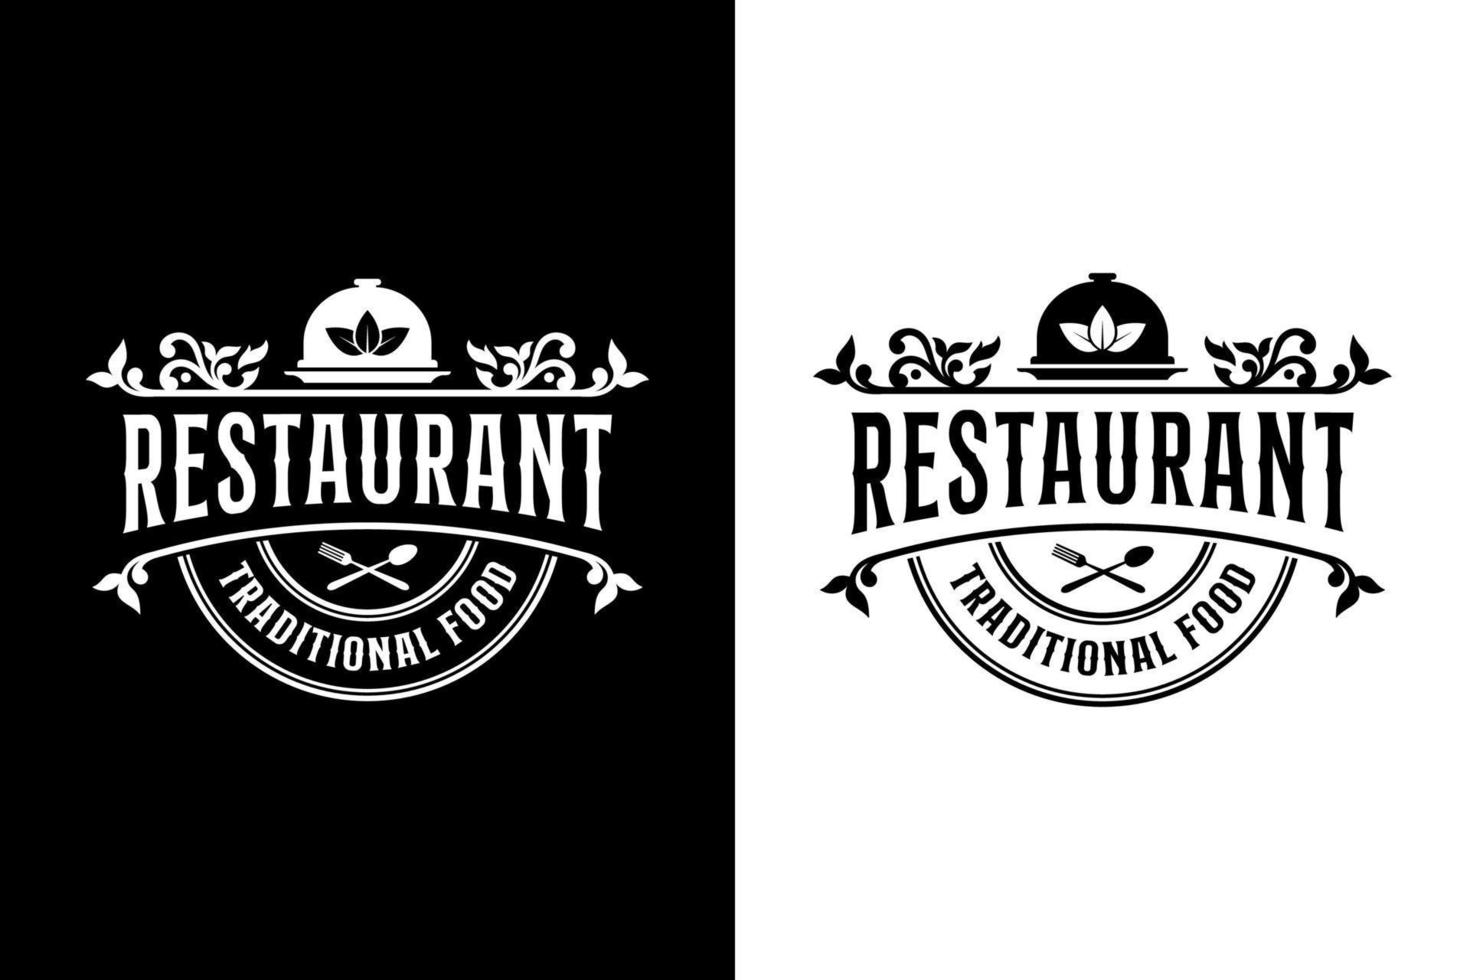 Restaurant traditionelles Essen im Vintage-Stil Design-Logo vektor